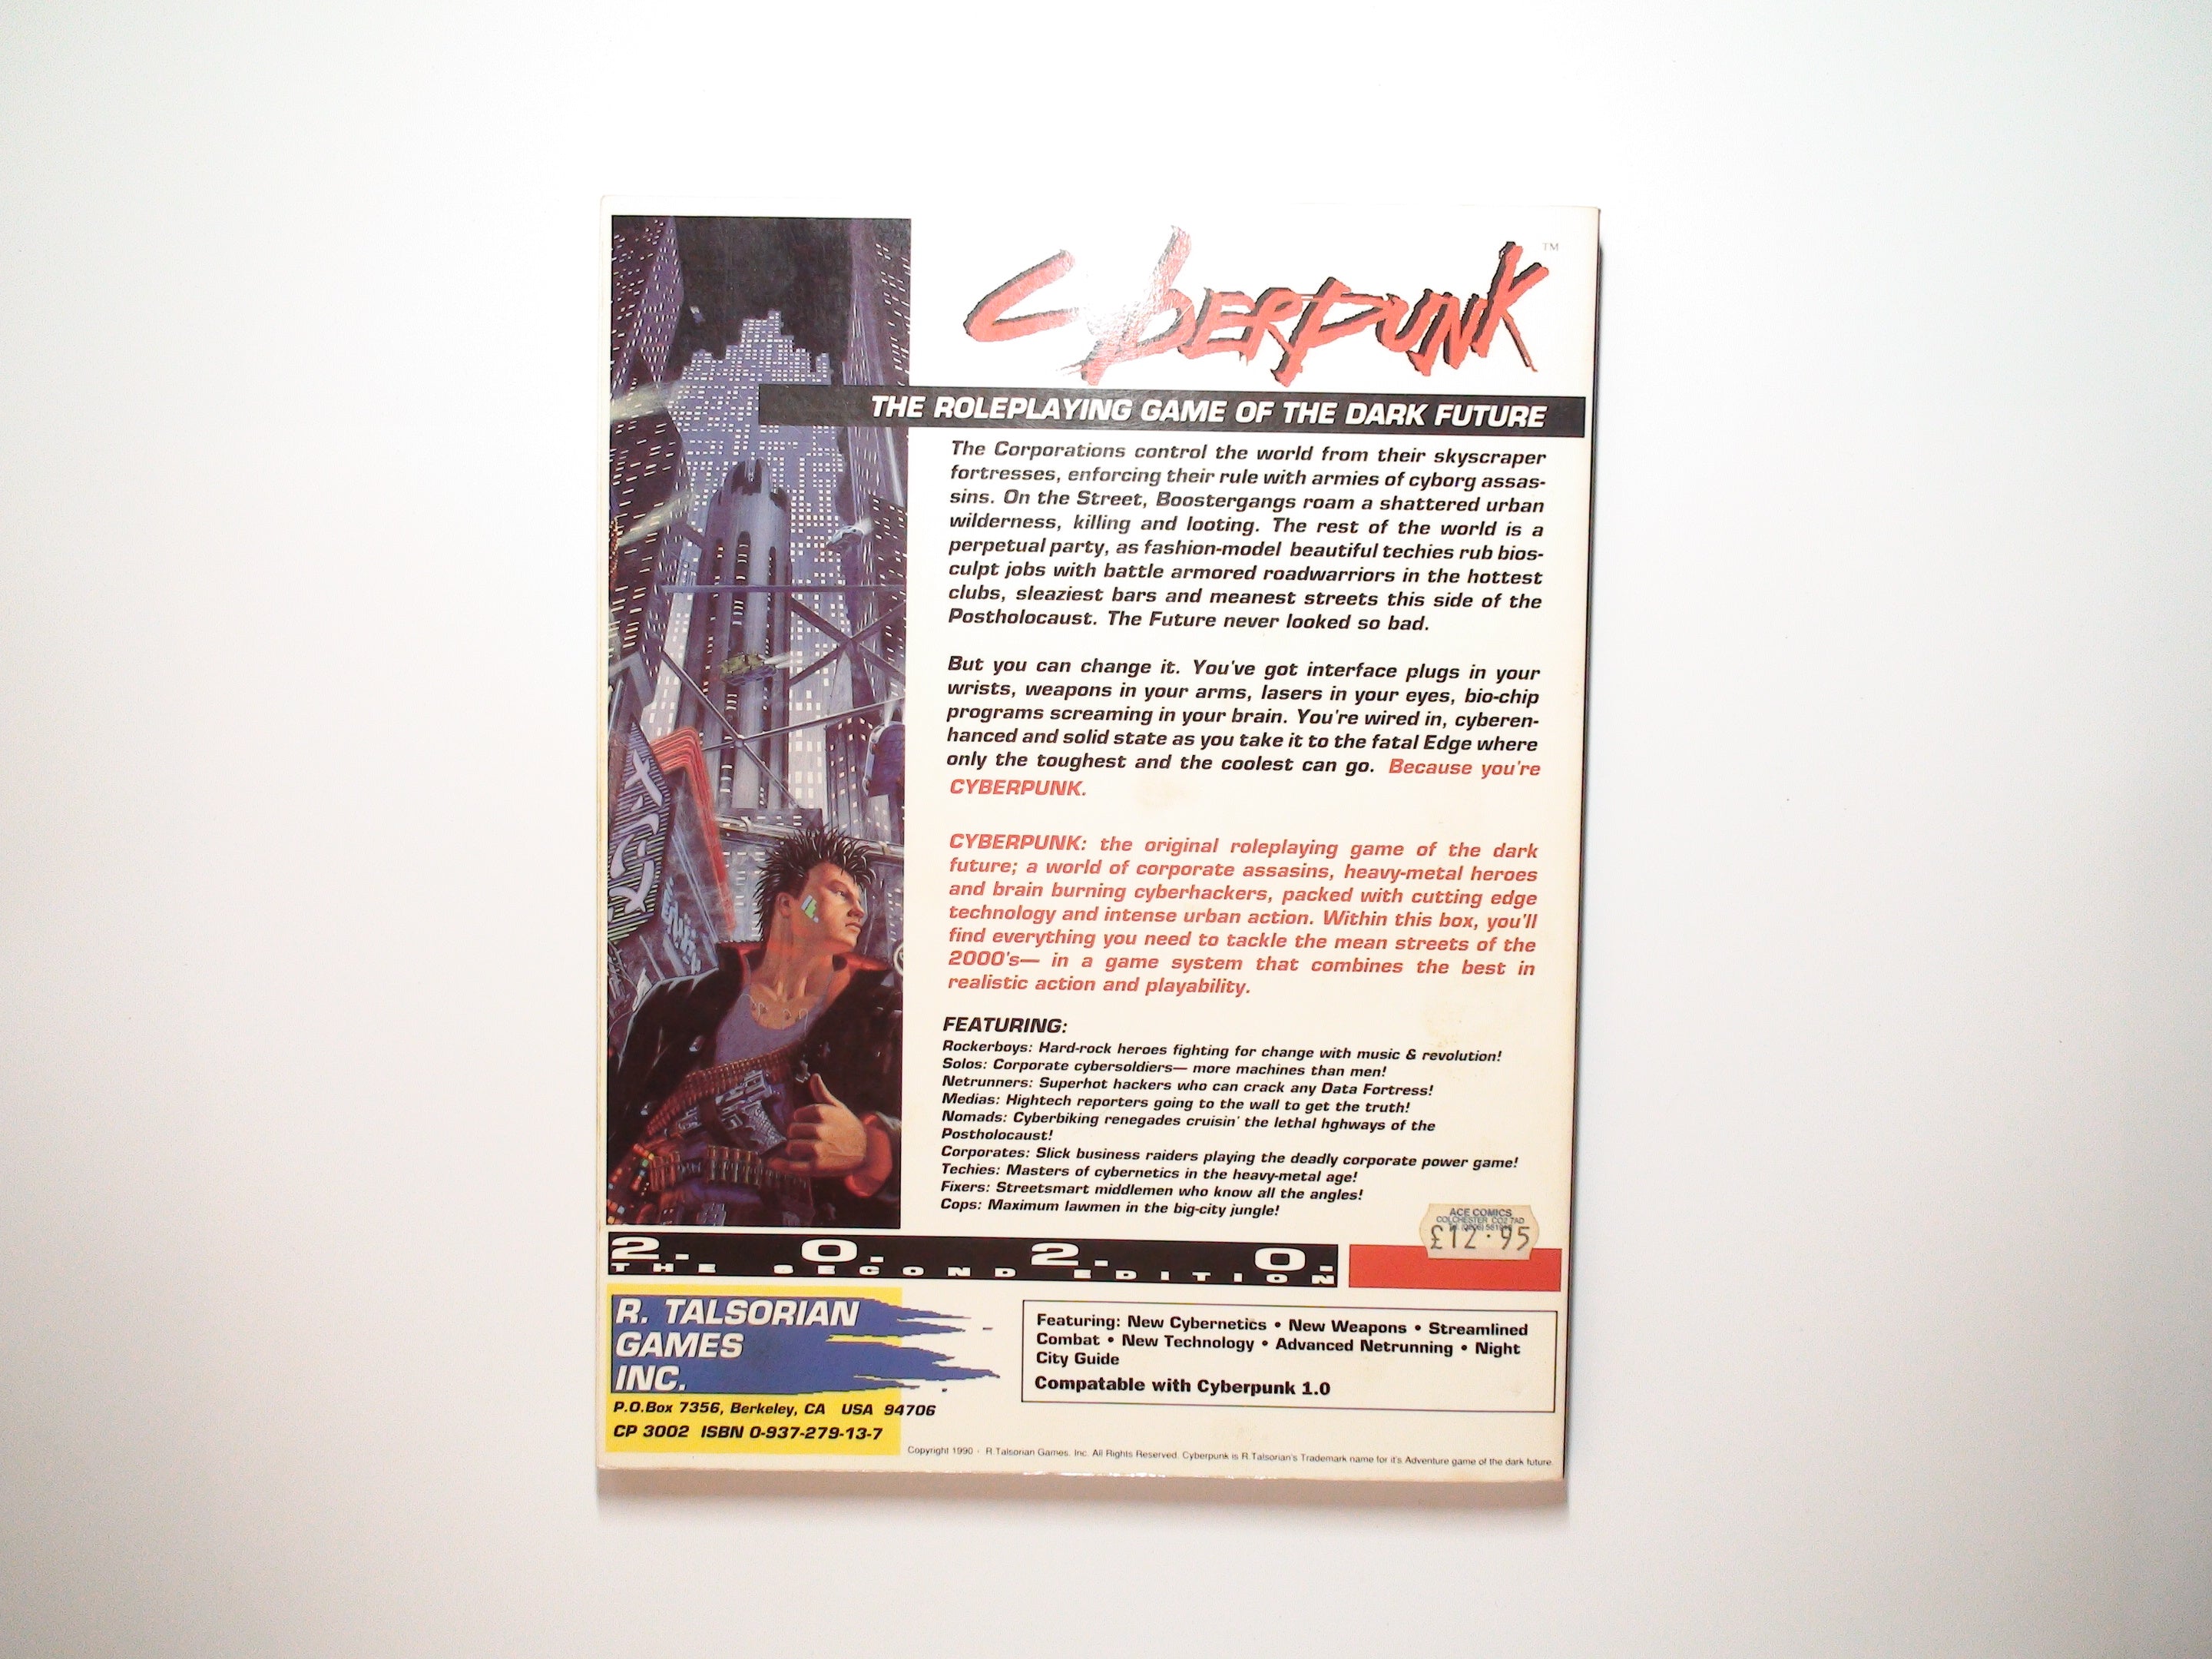 Cyberpunk 2020 RPG 2nd Ed., 1st Print, Core Rulebook, R. Talsorian CP3002, 1990